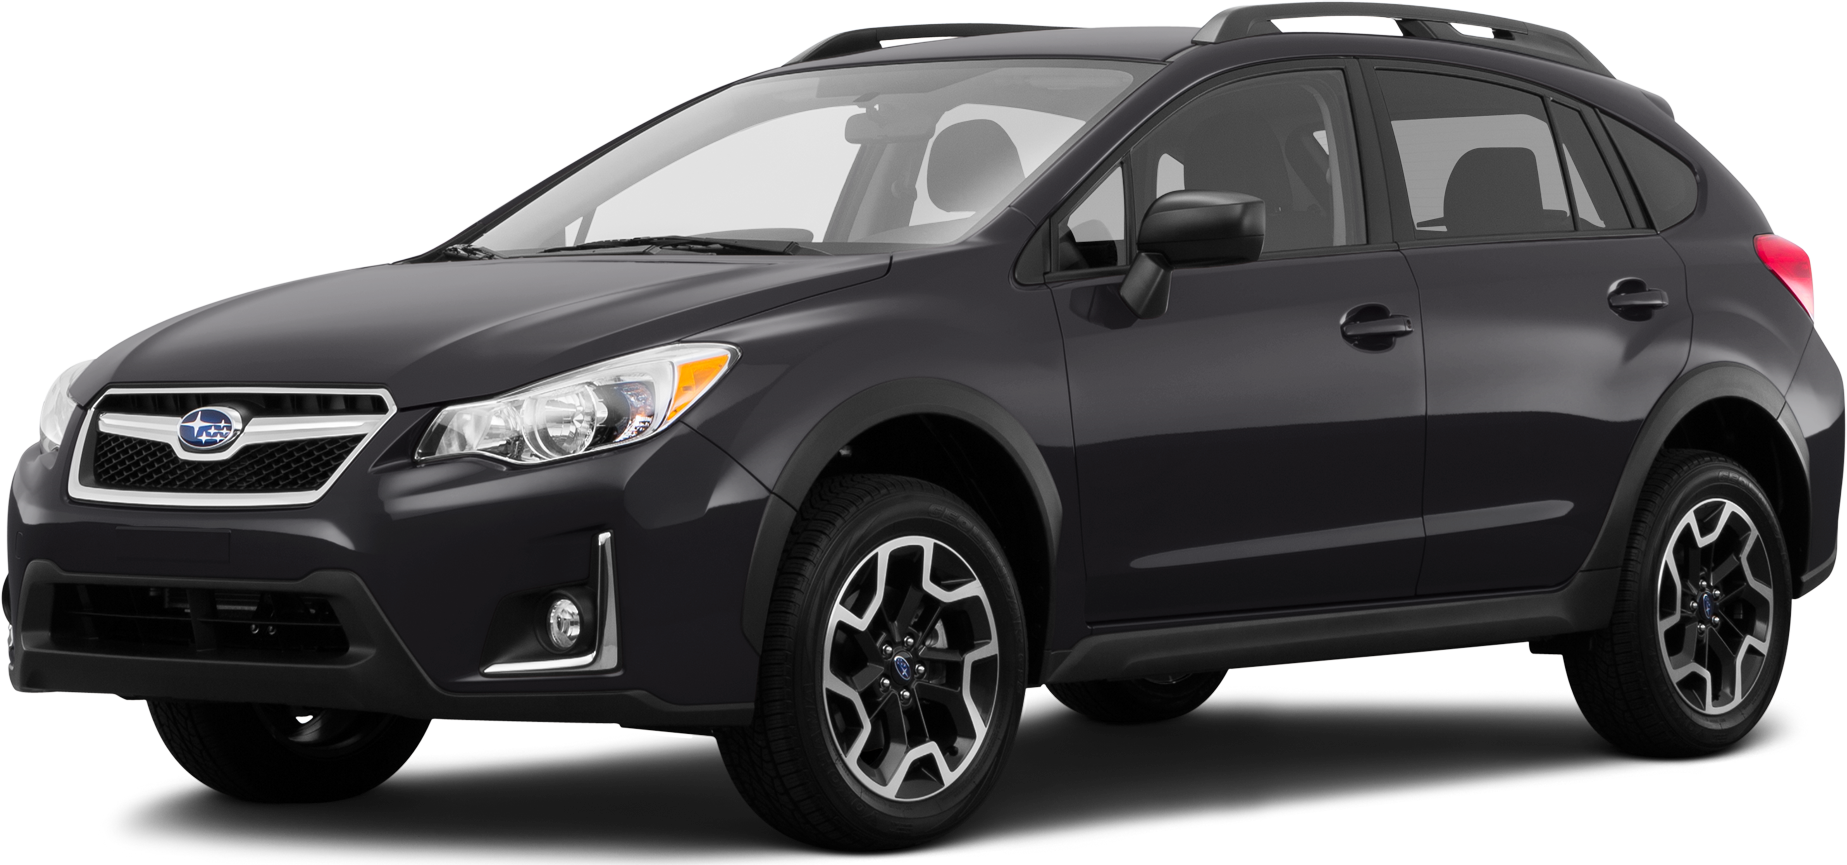 2016 Subaru Crosstrek Values Cars For Sale Kelley Blue Book